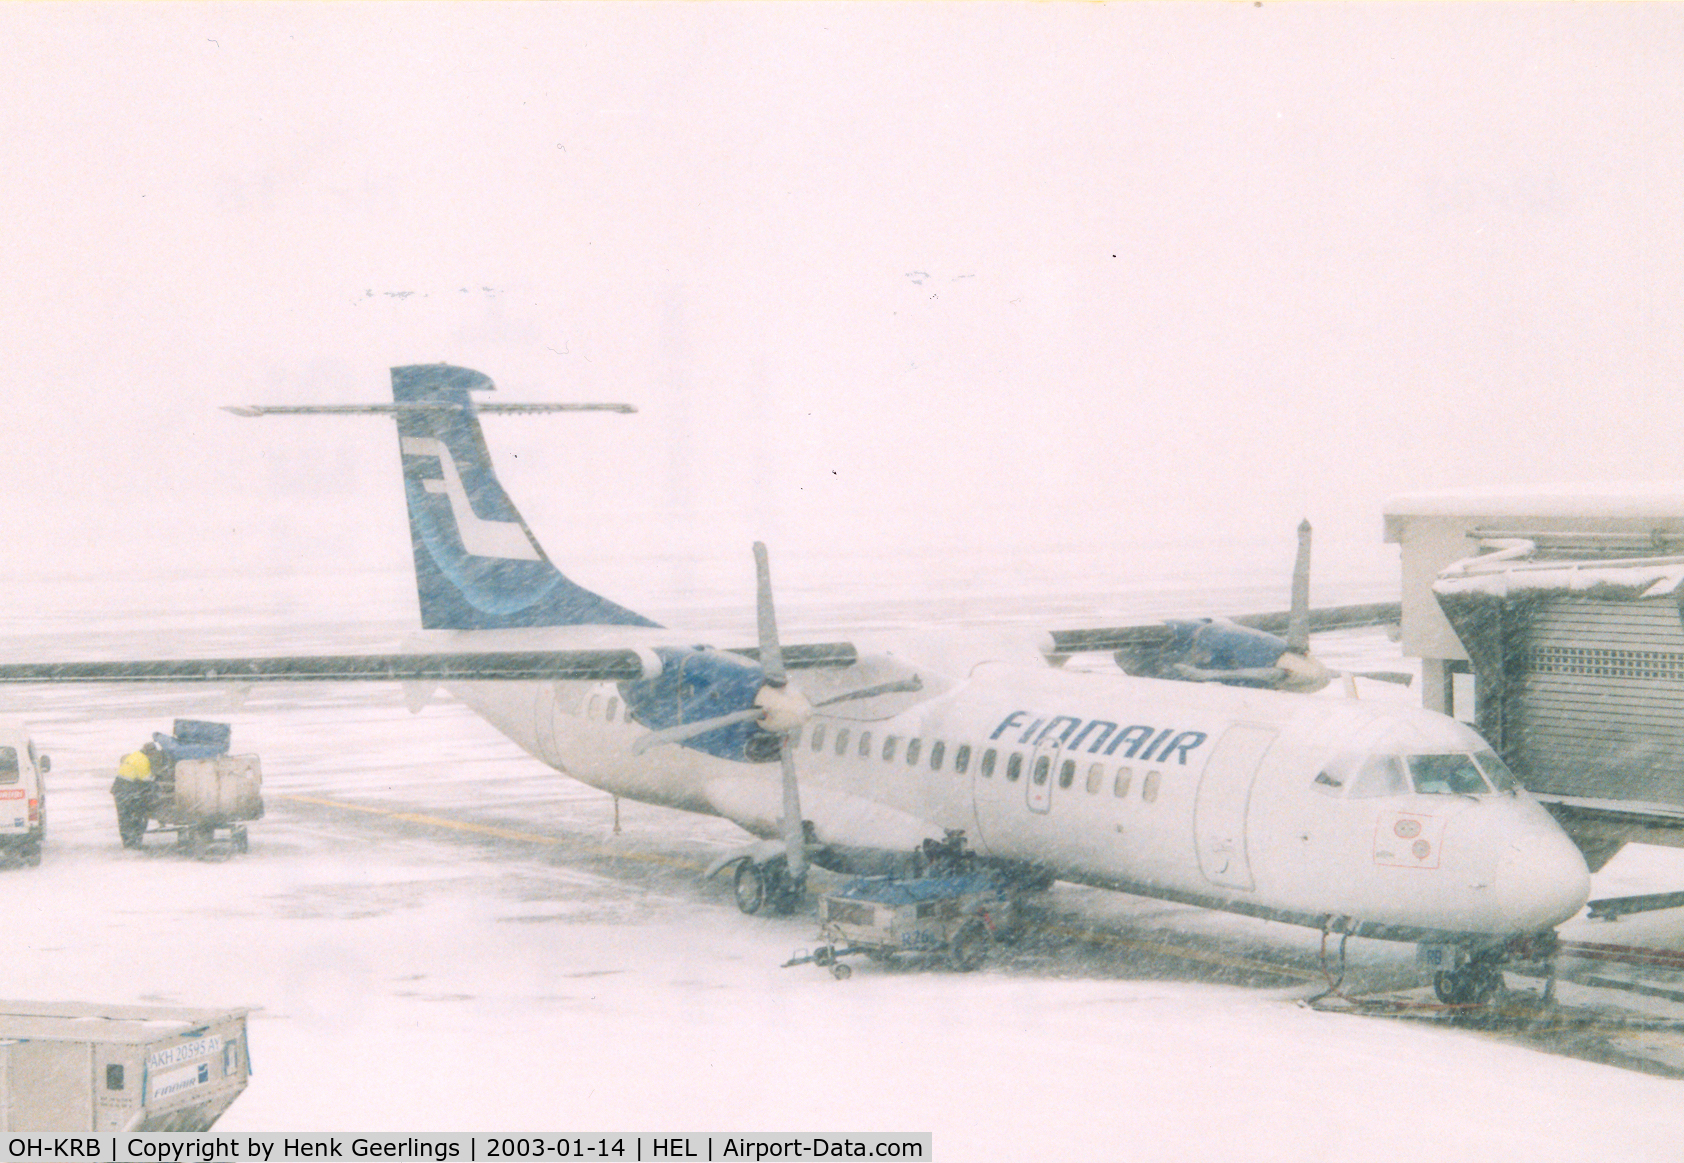 OH-KRB, 1989 ATR 72-201 C/N 140, Finnair, winter 2003